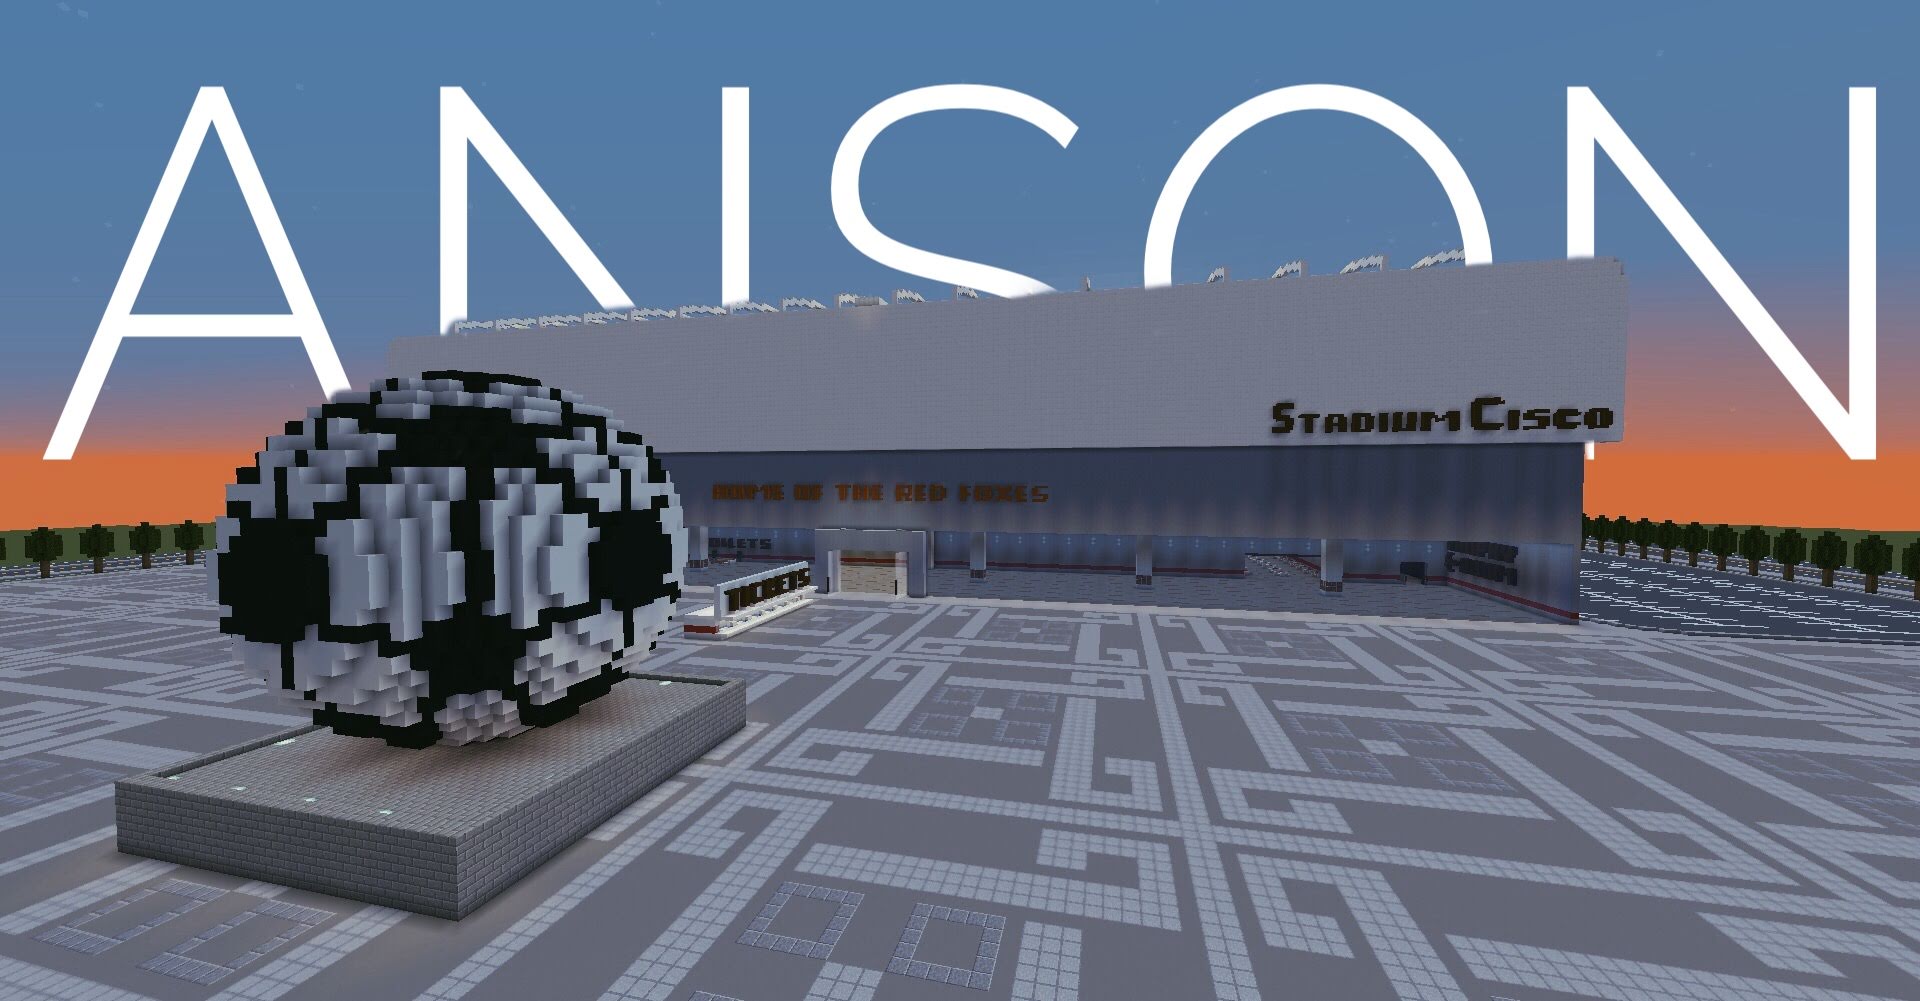 Download Stadium Cisco for Minecraft 1.13.2